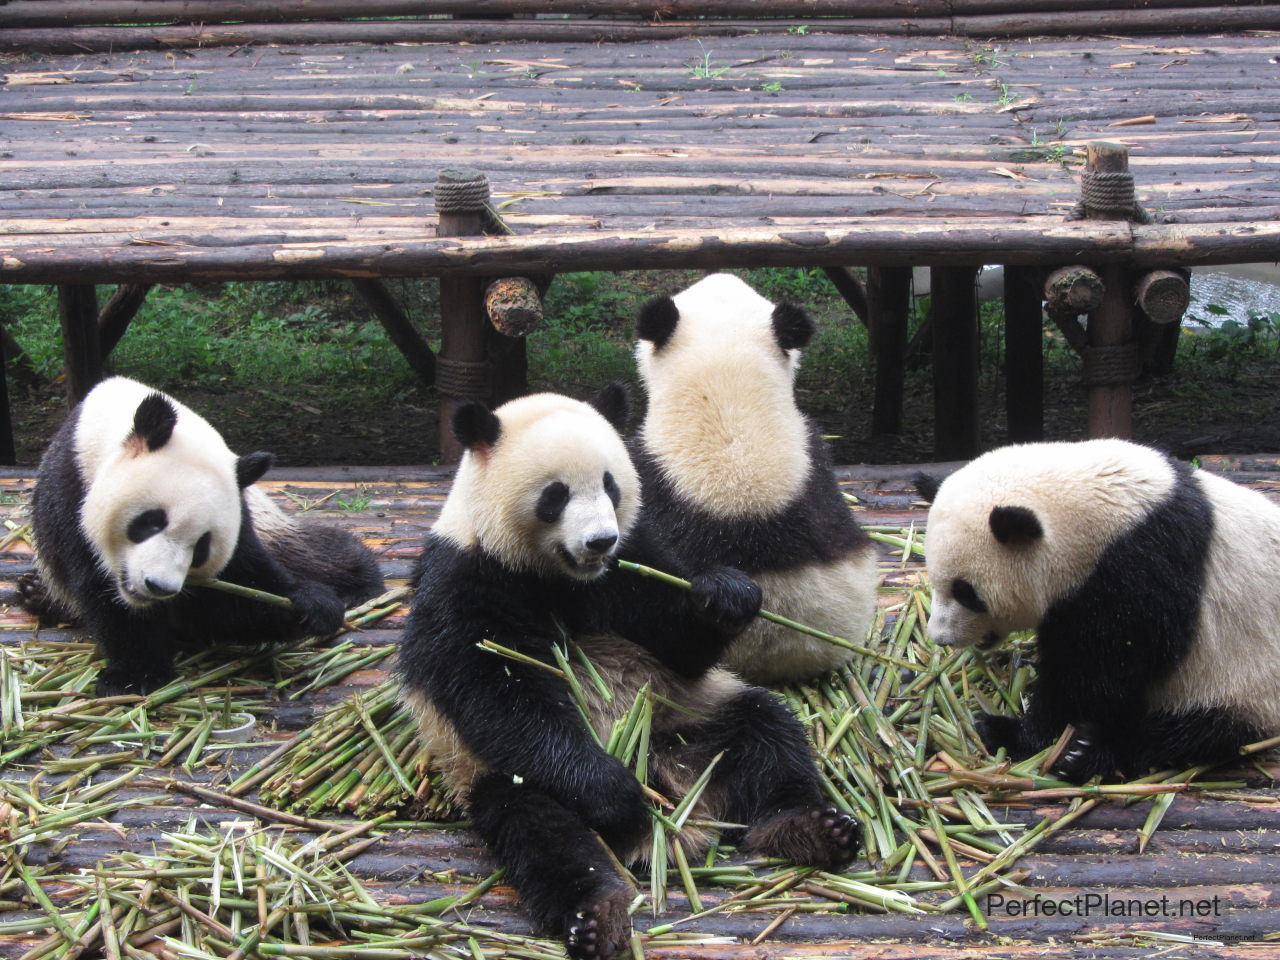 Panda Bears eating